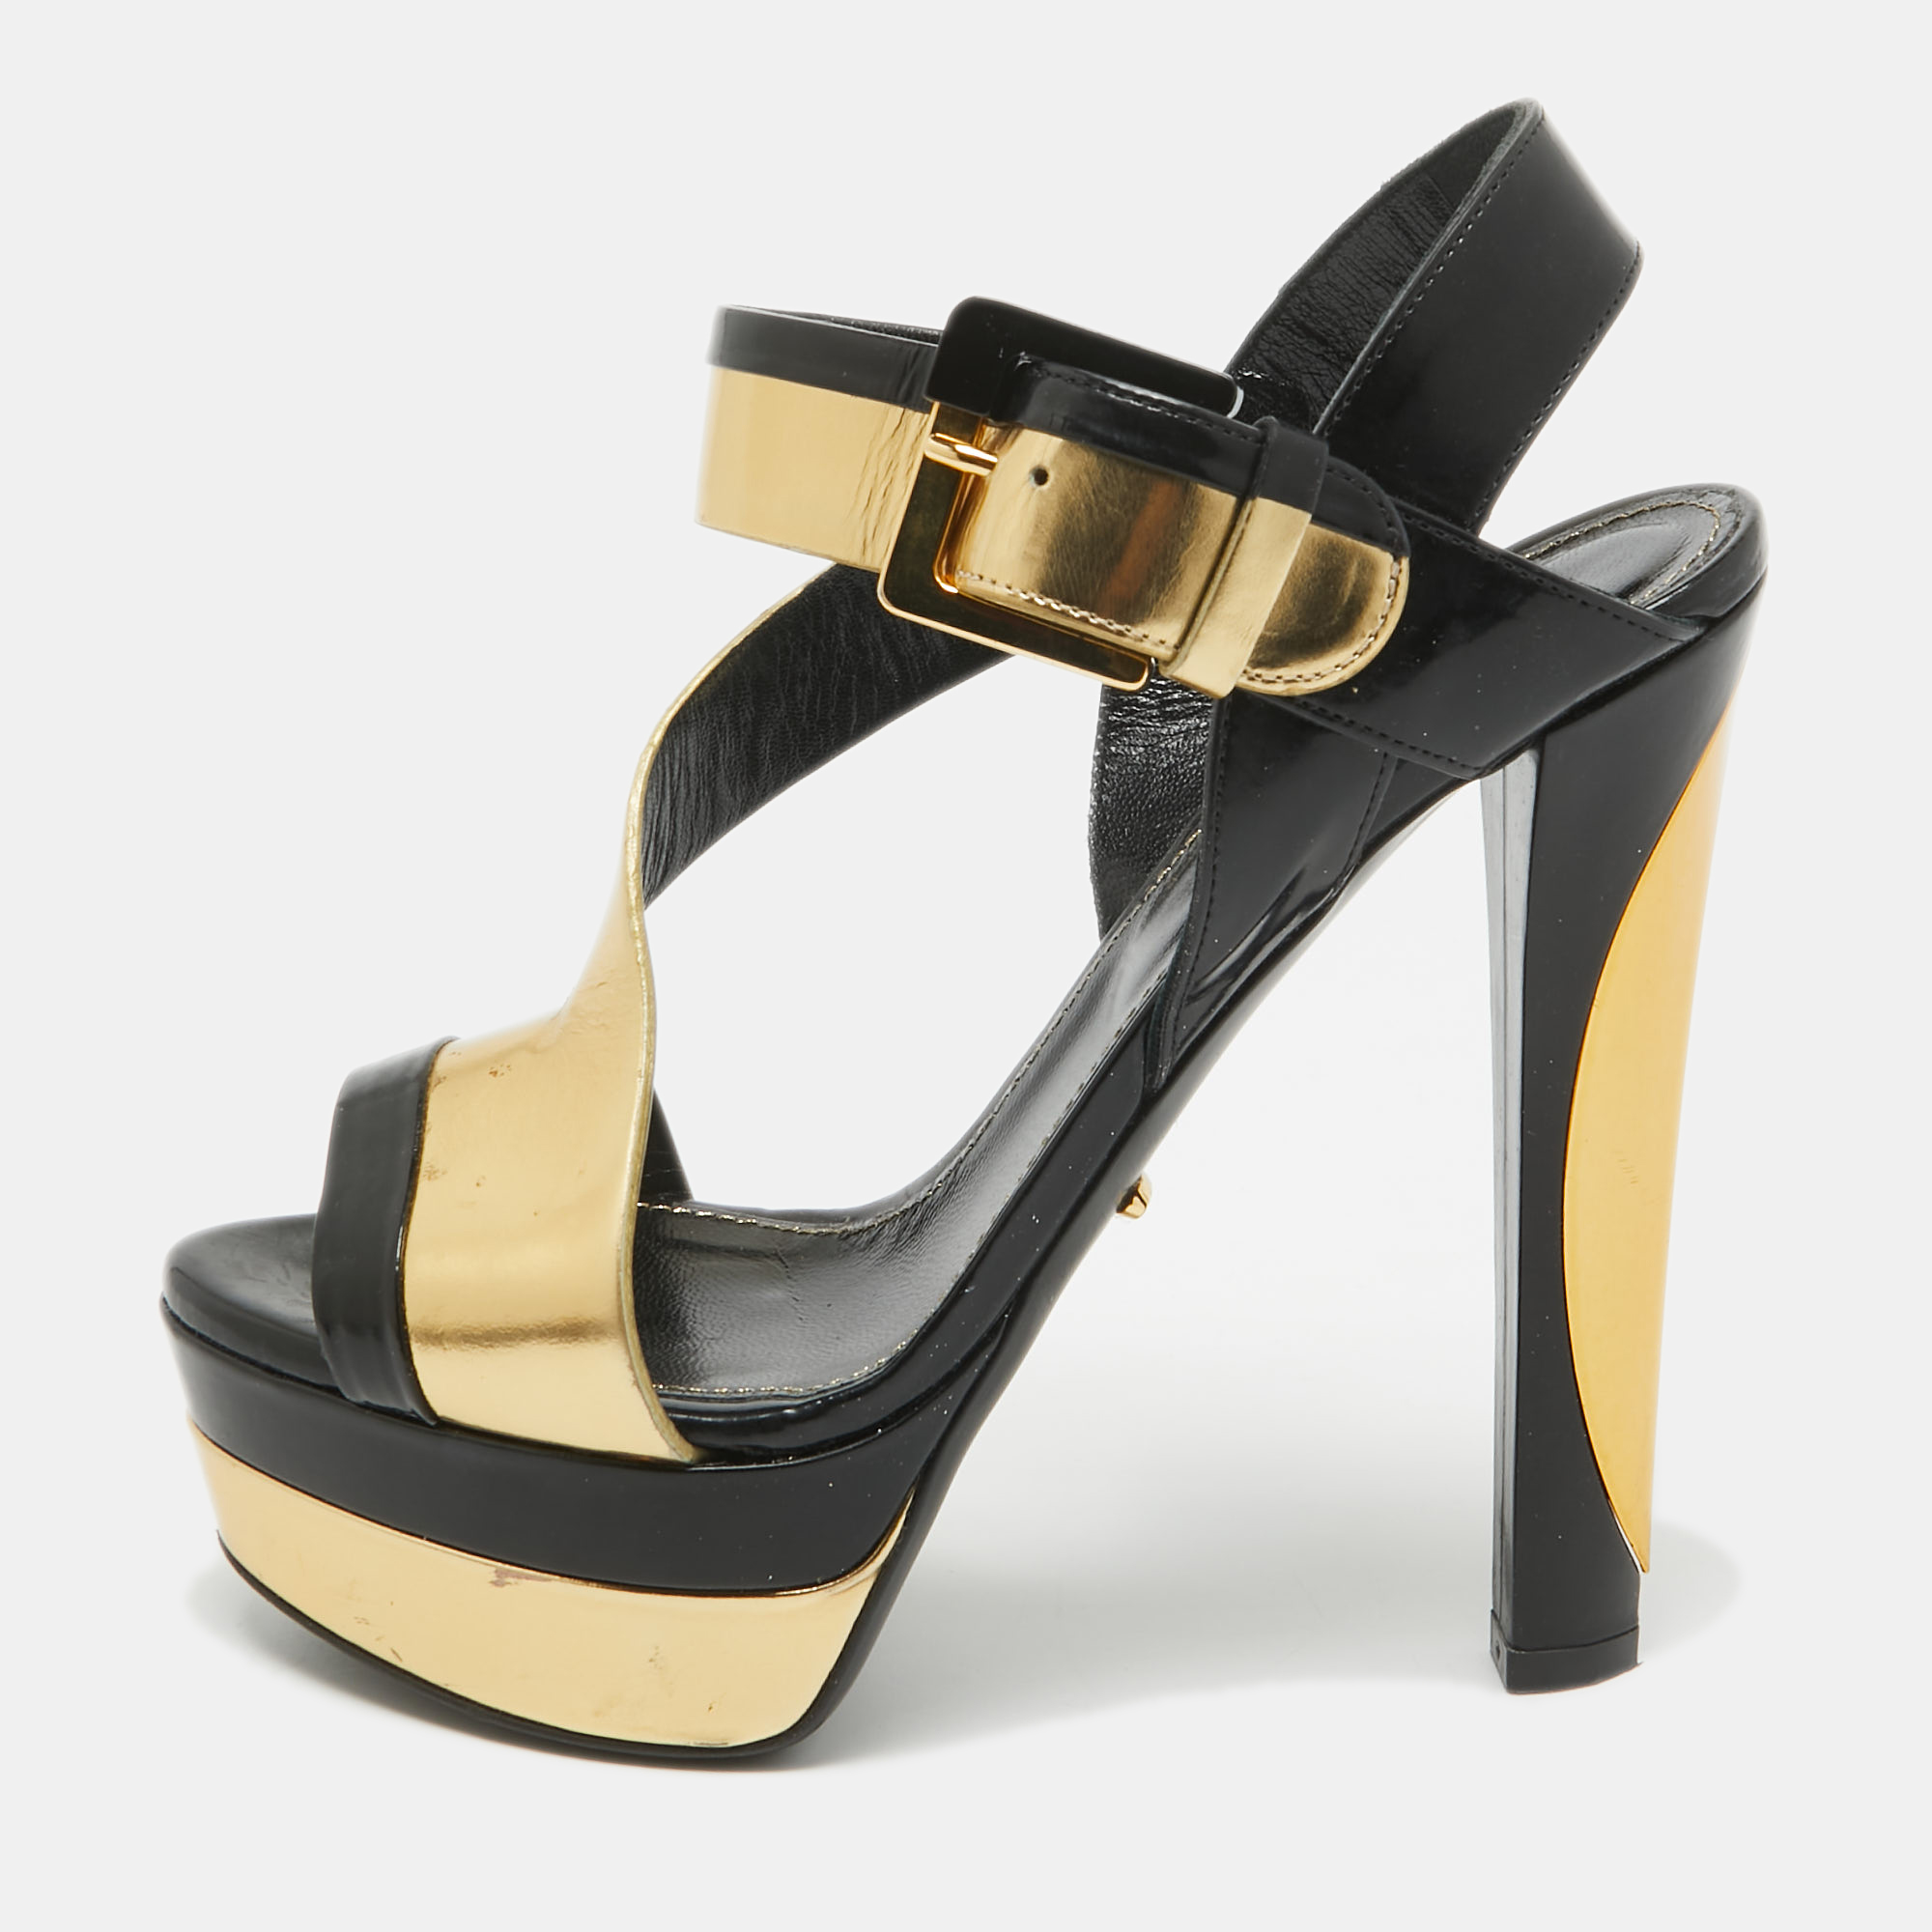 Sergio rossi black/gold leather platform ankle strap sandals size 35.5